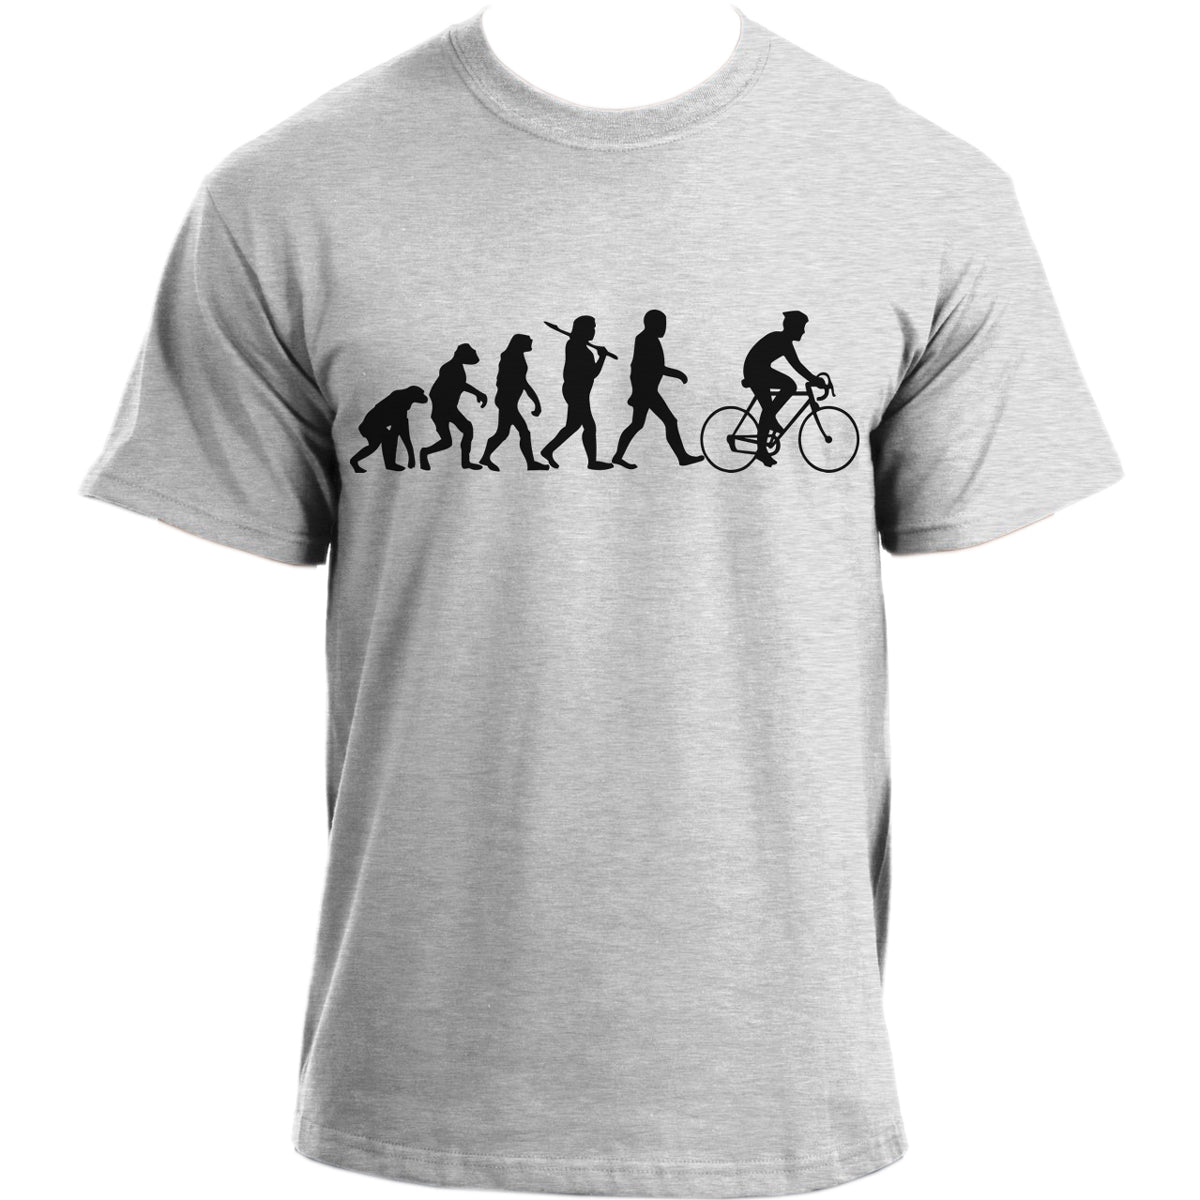 Cycling Evolution T-Shirt I Bicycle Tee Bike Sports Top I Funny Ape to Man Evolution Cyclist Tshirt For Men